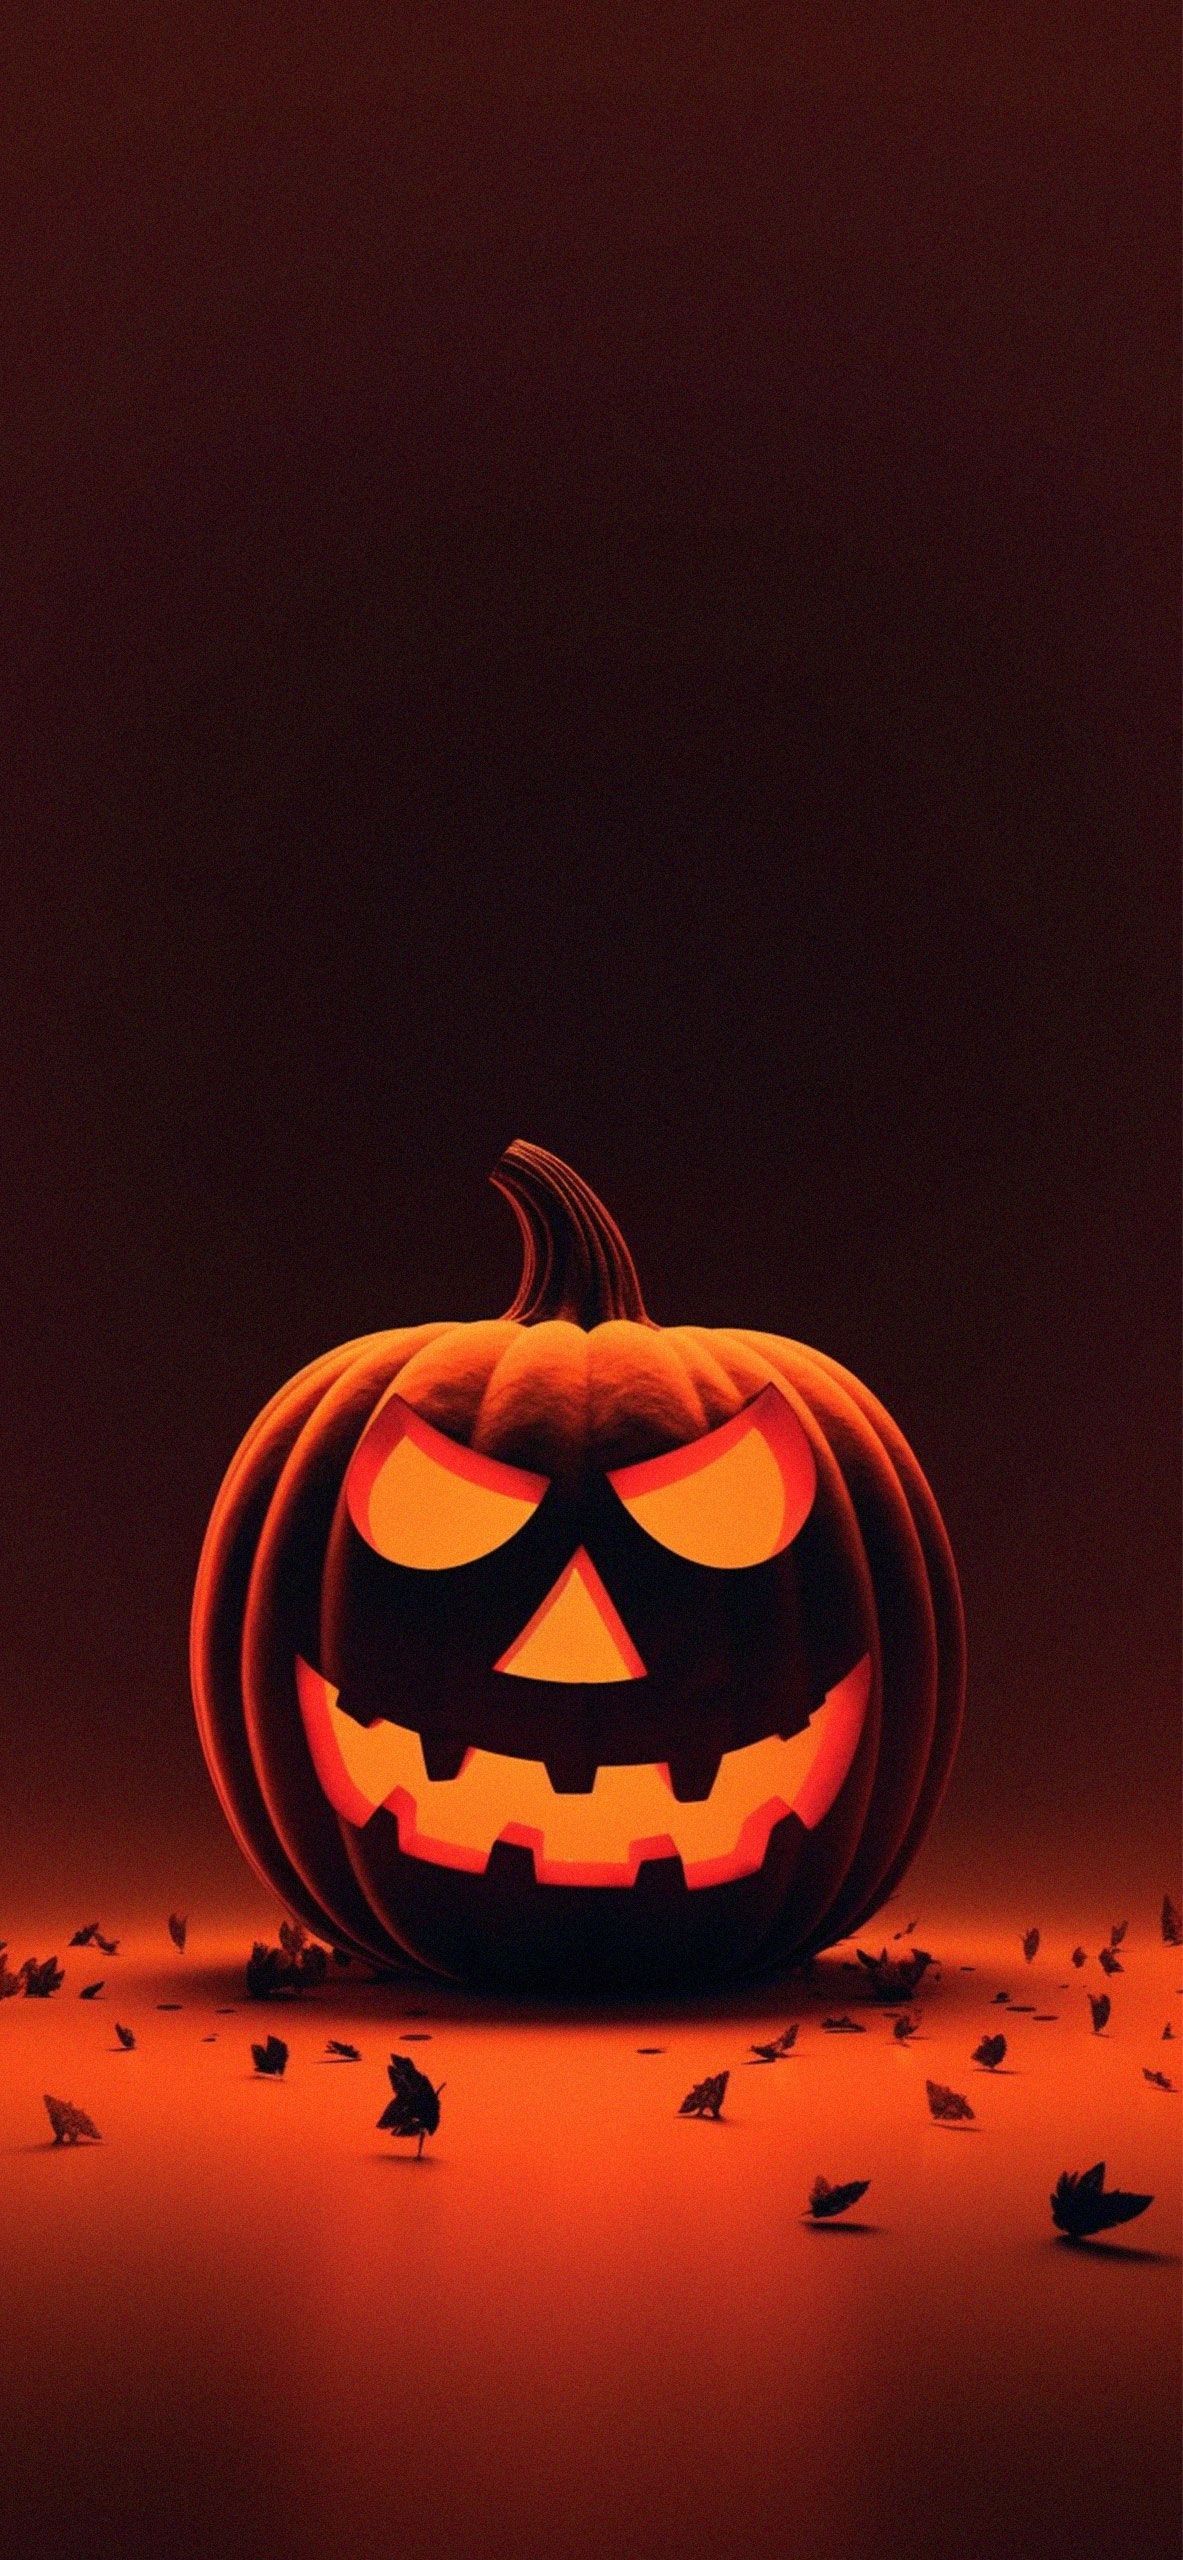 Halloween iPhone wallpaper with a pumpkin. - Halloween, spooky, cute Halloween